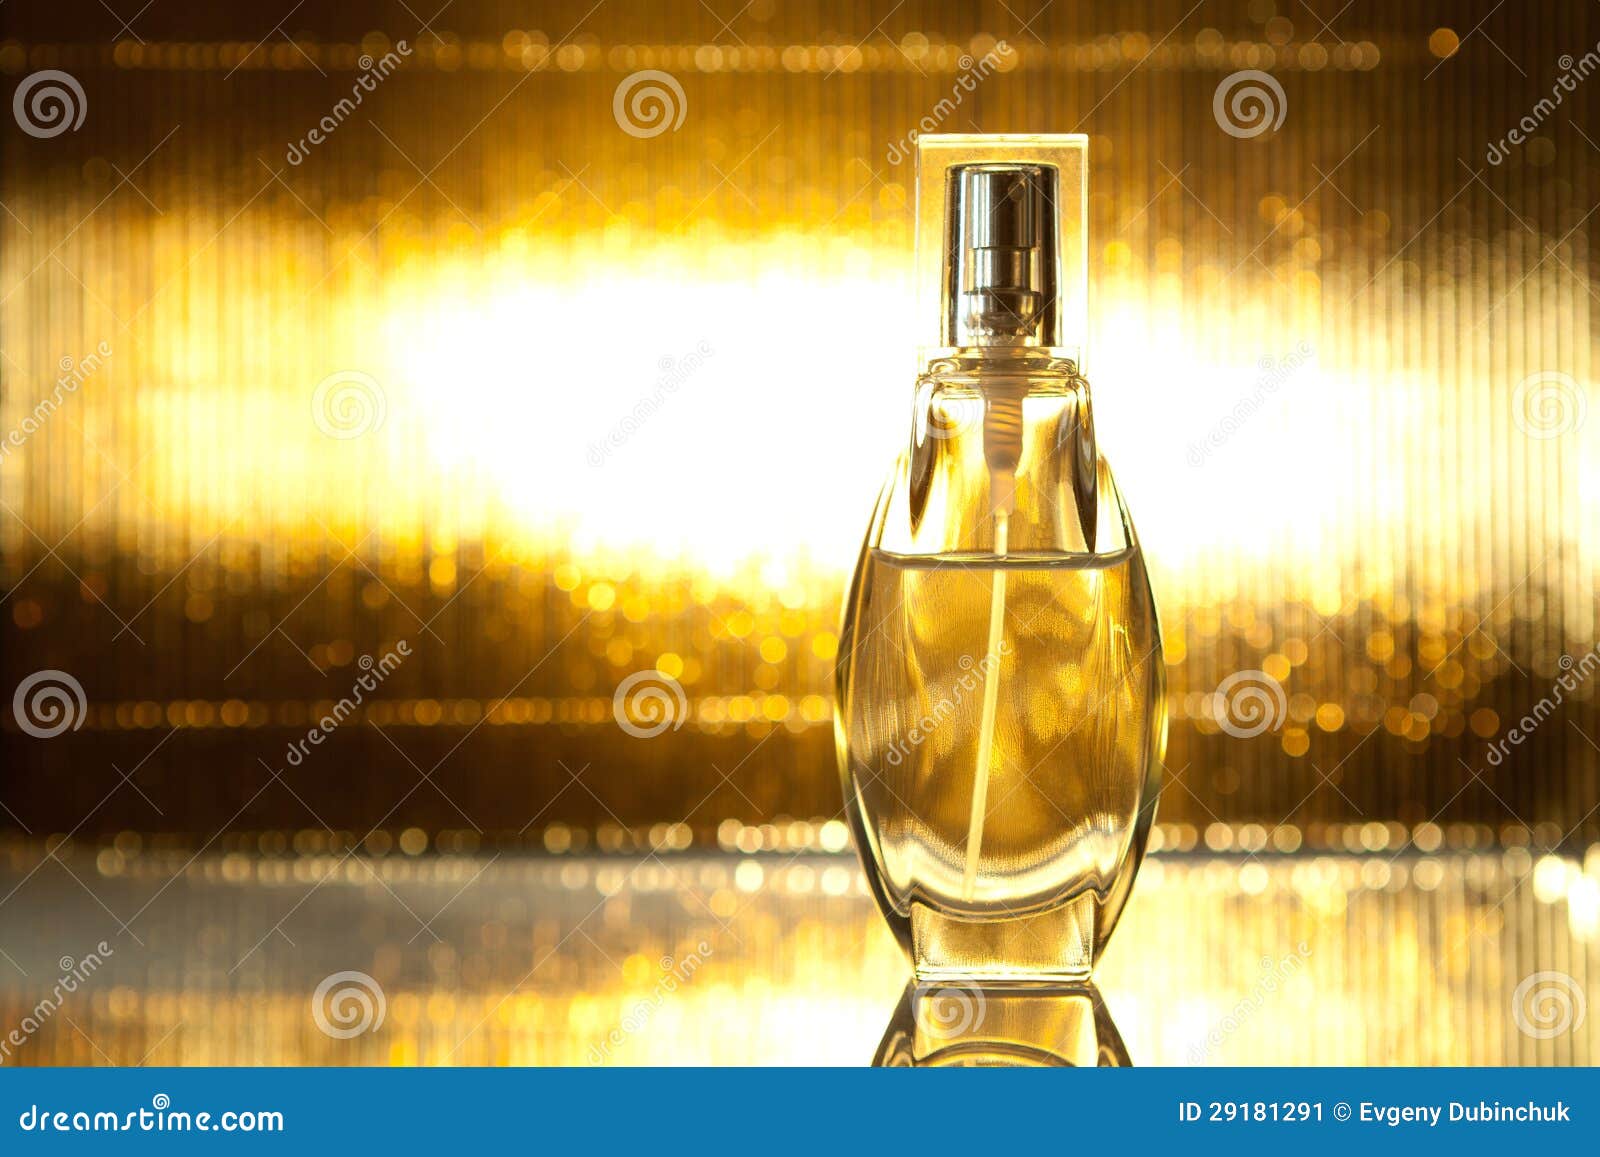 bottle of perfume on gold background